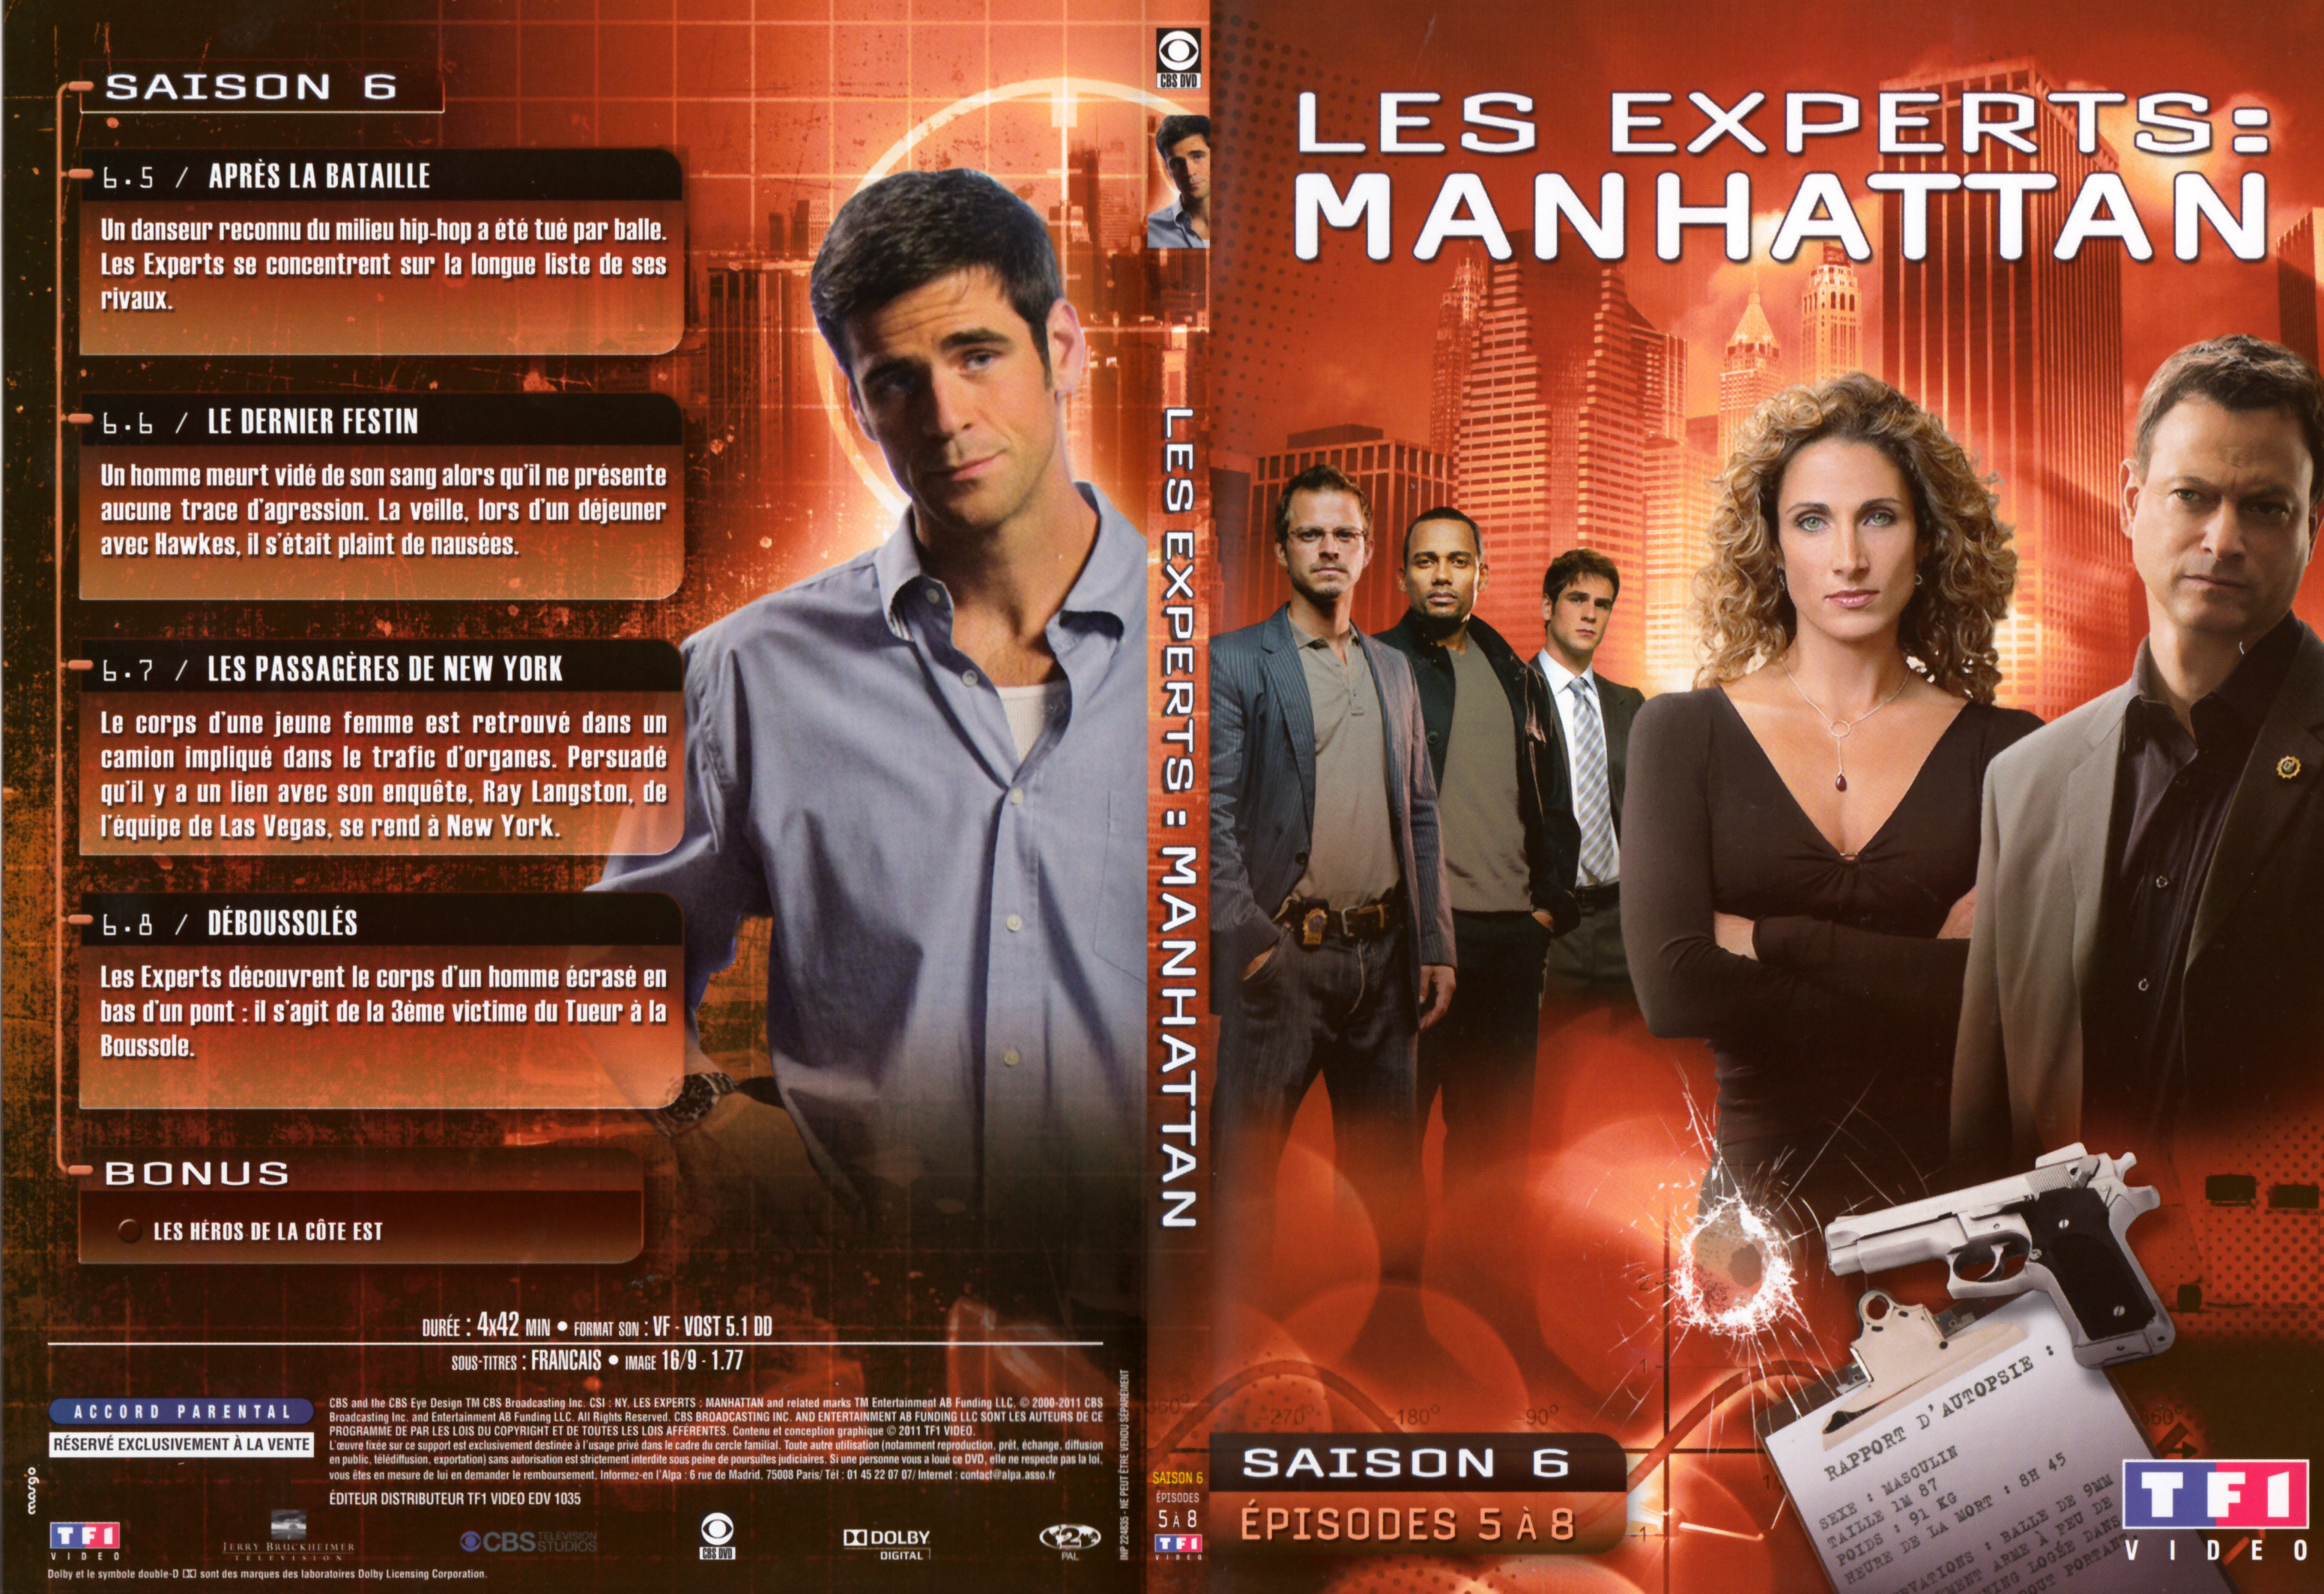 Jaquette DVD Les Experts Manhattan Saison 6 DVD 2